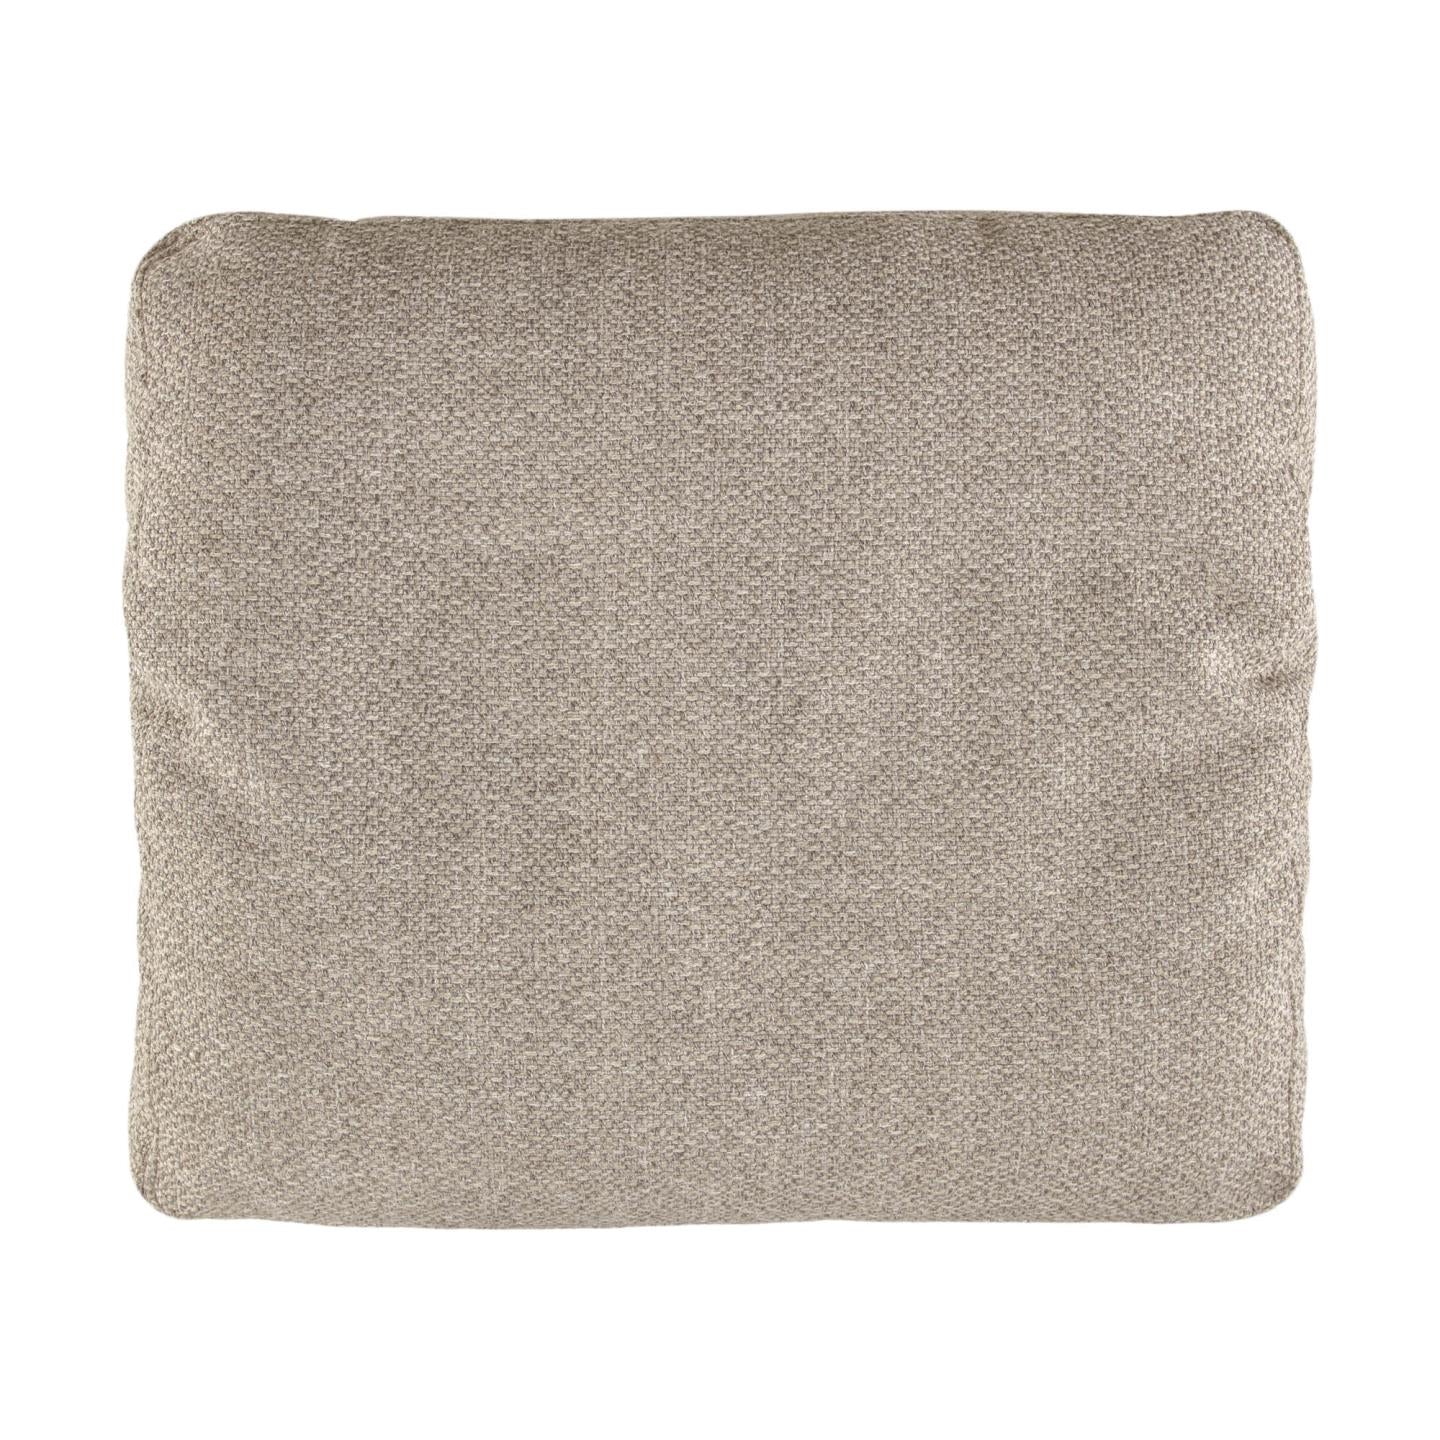 Noa set of 2 armrest cushions, in beige